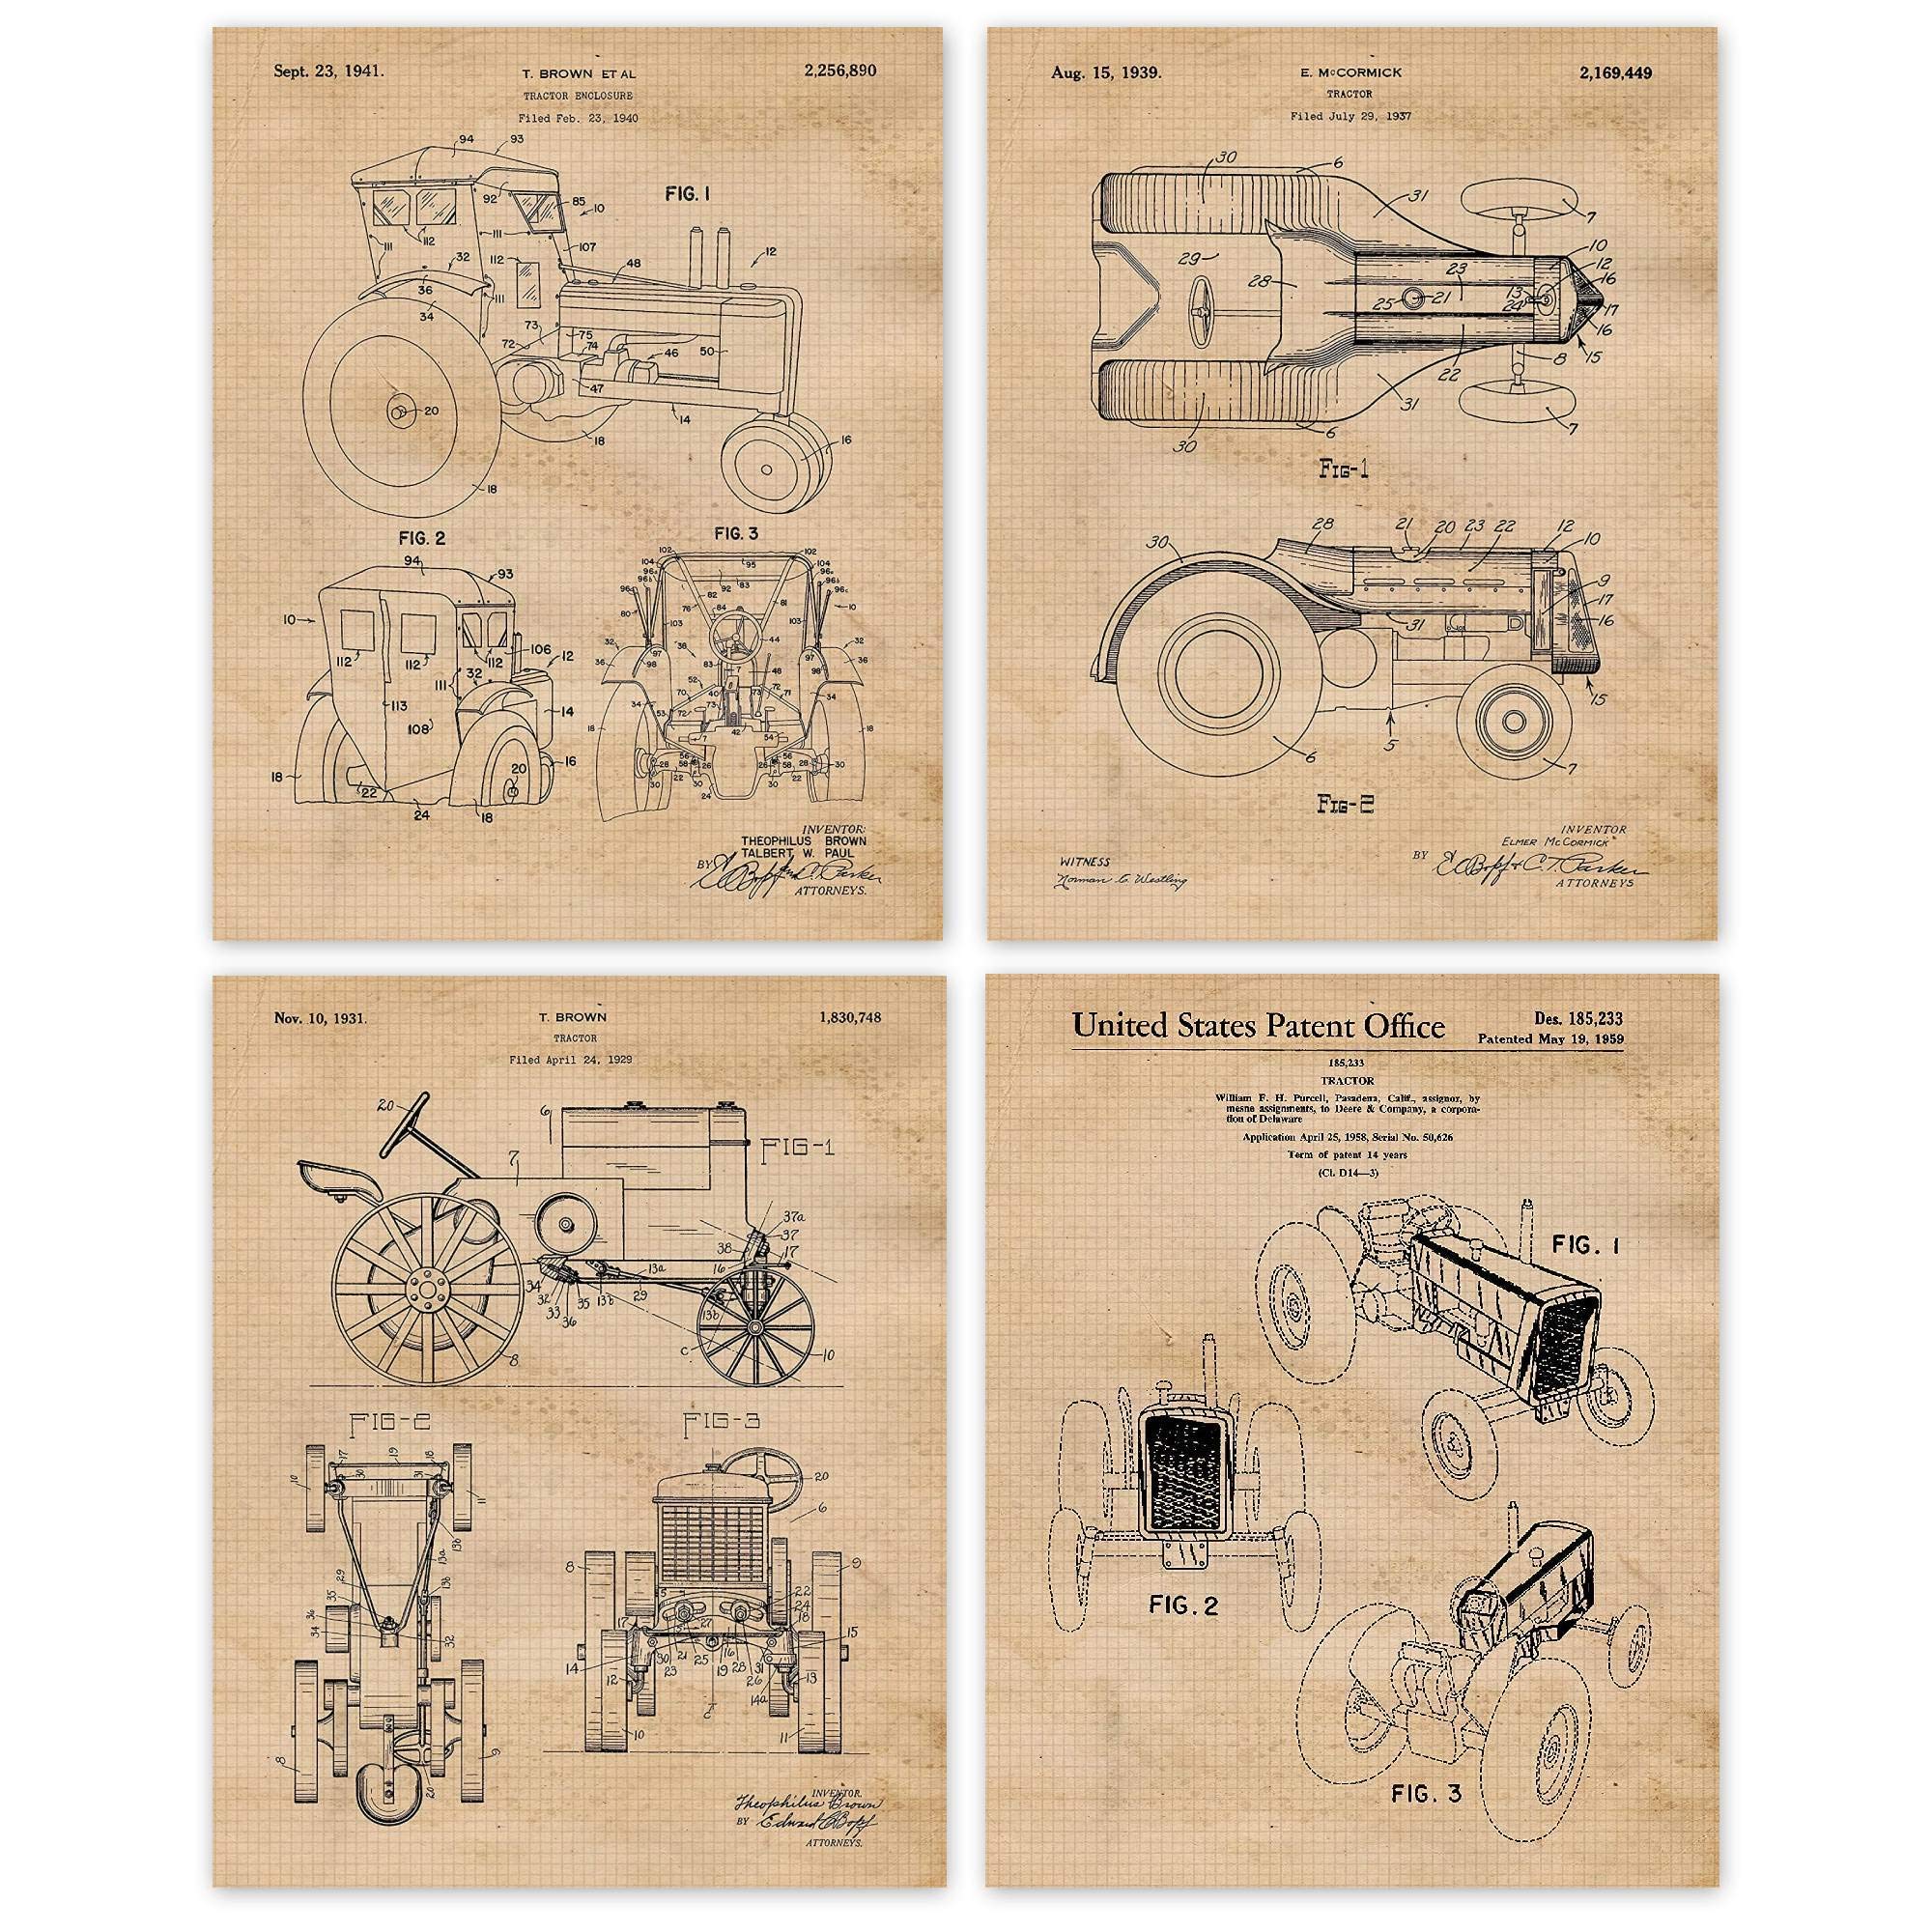 Vintage Tractor Farming Patent Prints, 4 (8x10) Unframed Photos, Wall Art Decor Gifts Under 20 for Home Office Garage Shop Man Cave Teacher Student Rancher Farmer Country Cowboys John Deere Fan